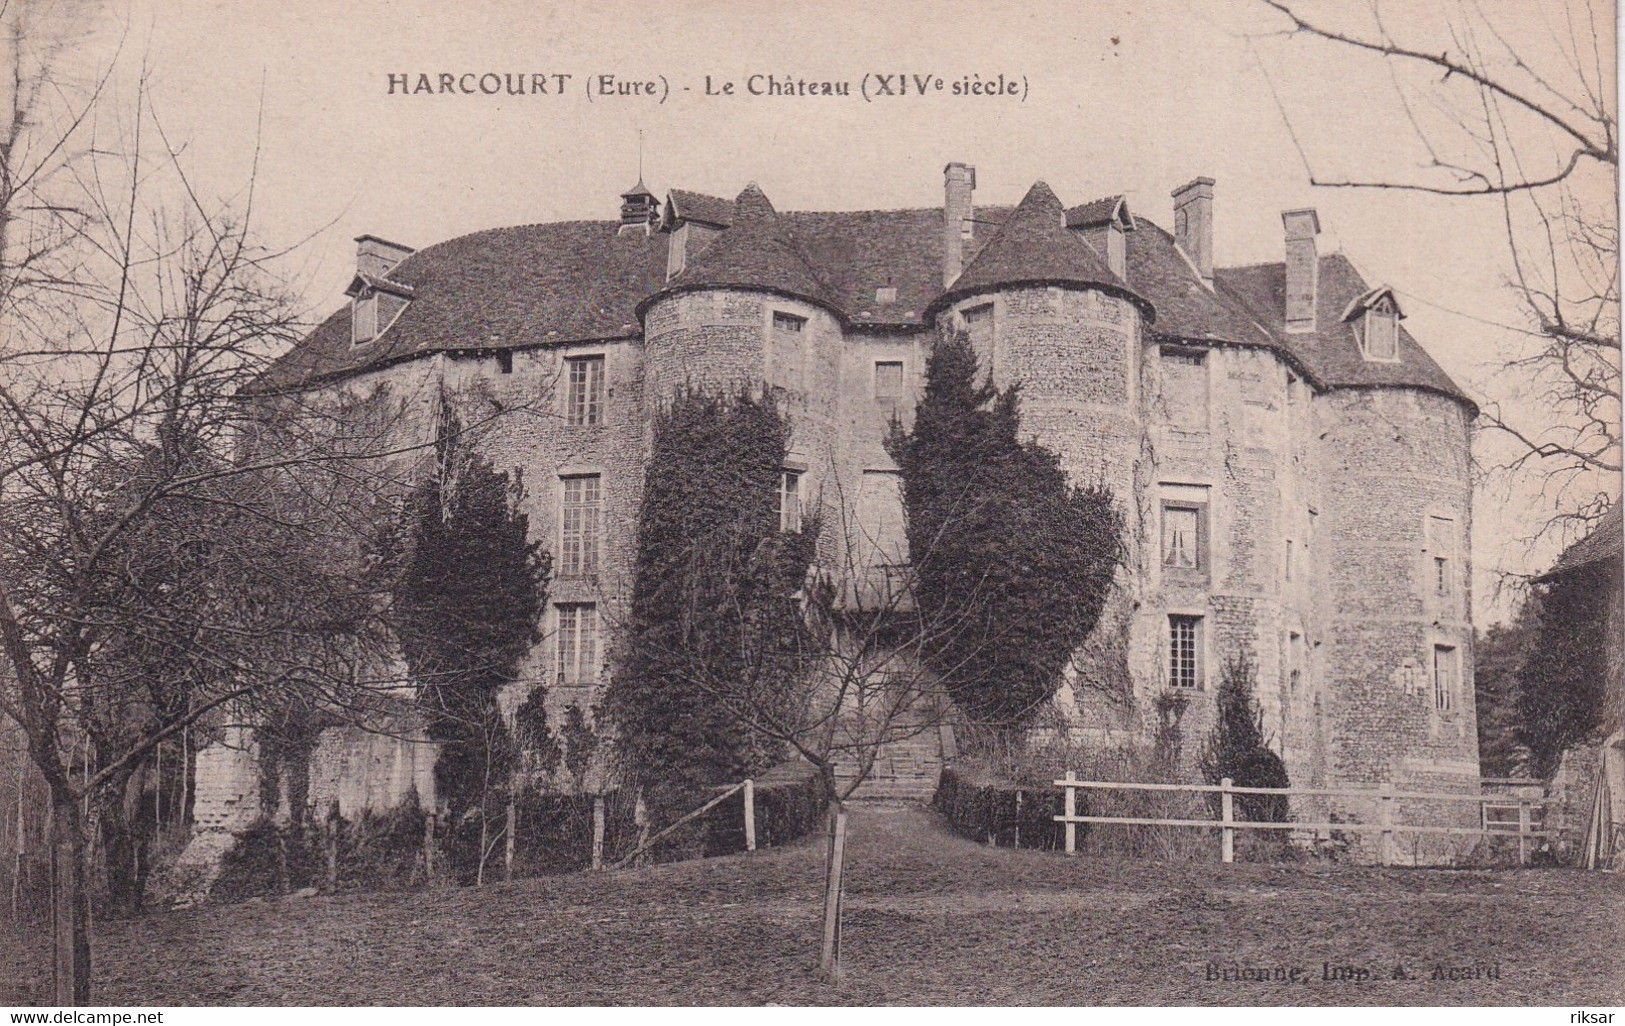 HARCOURT - Harcourt